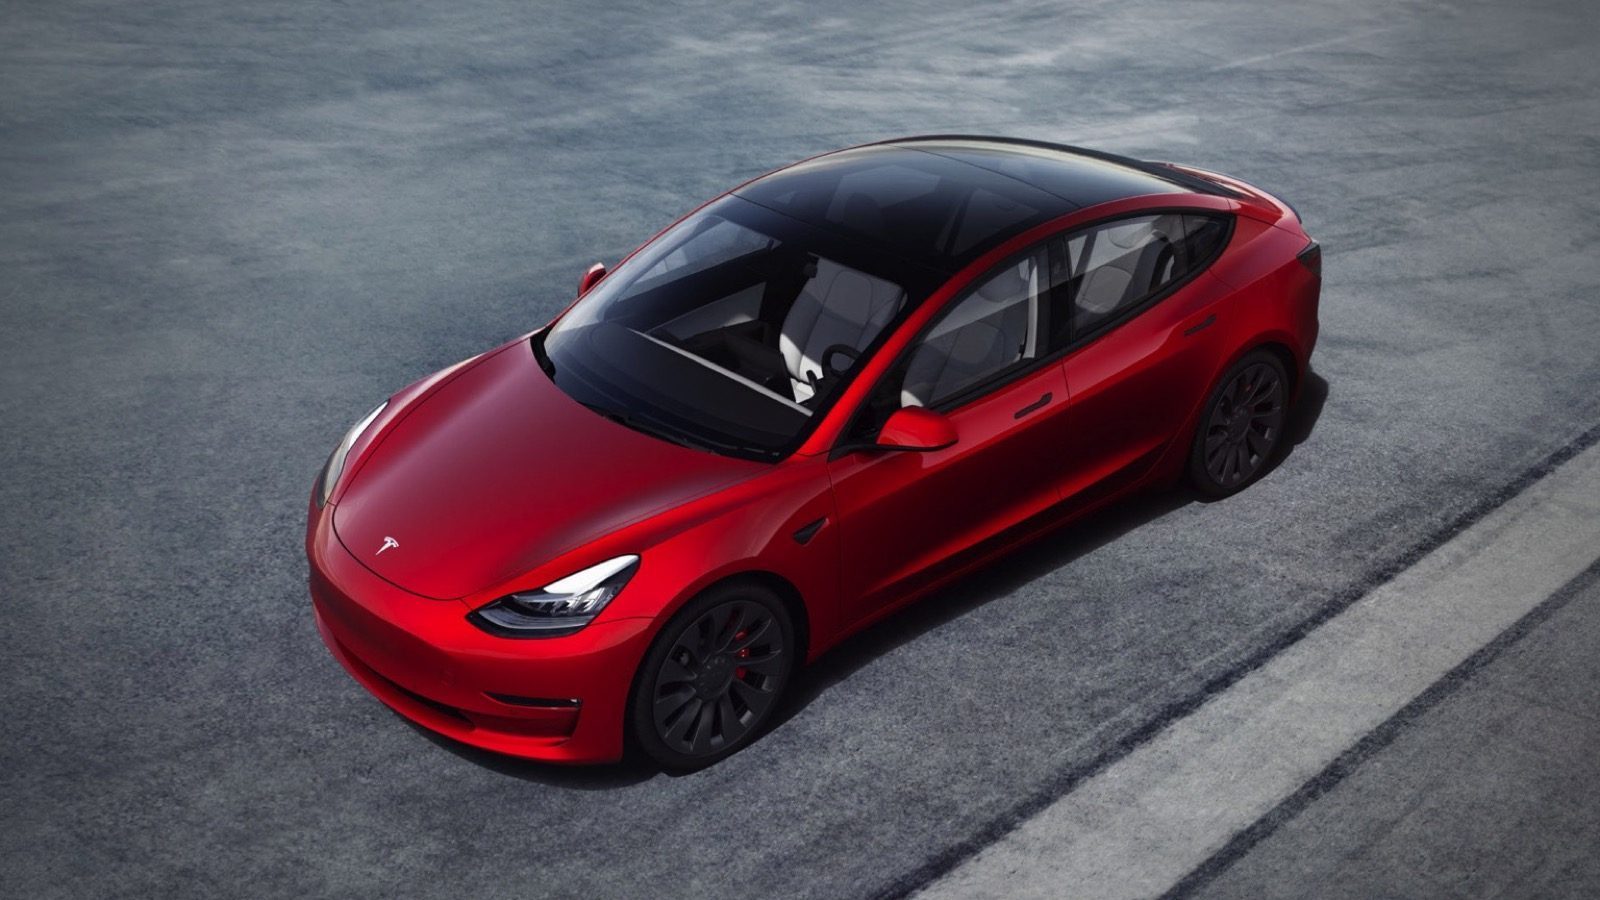 mond Perth Blackborough Spuug uit Gewicht Tesla modellen gaat ernstig omhoog - Autoblog.nl